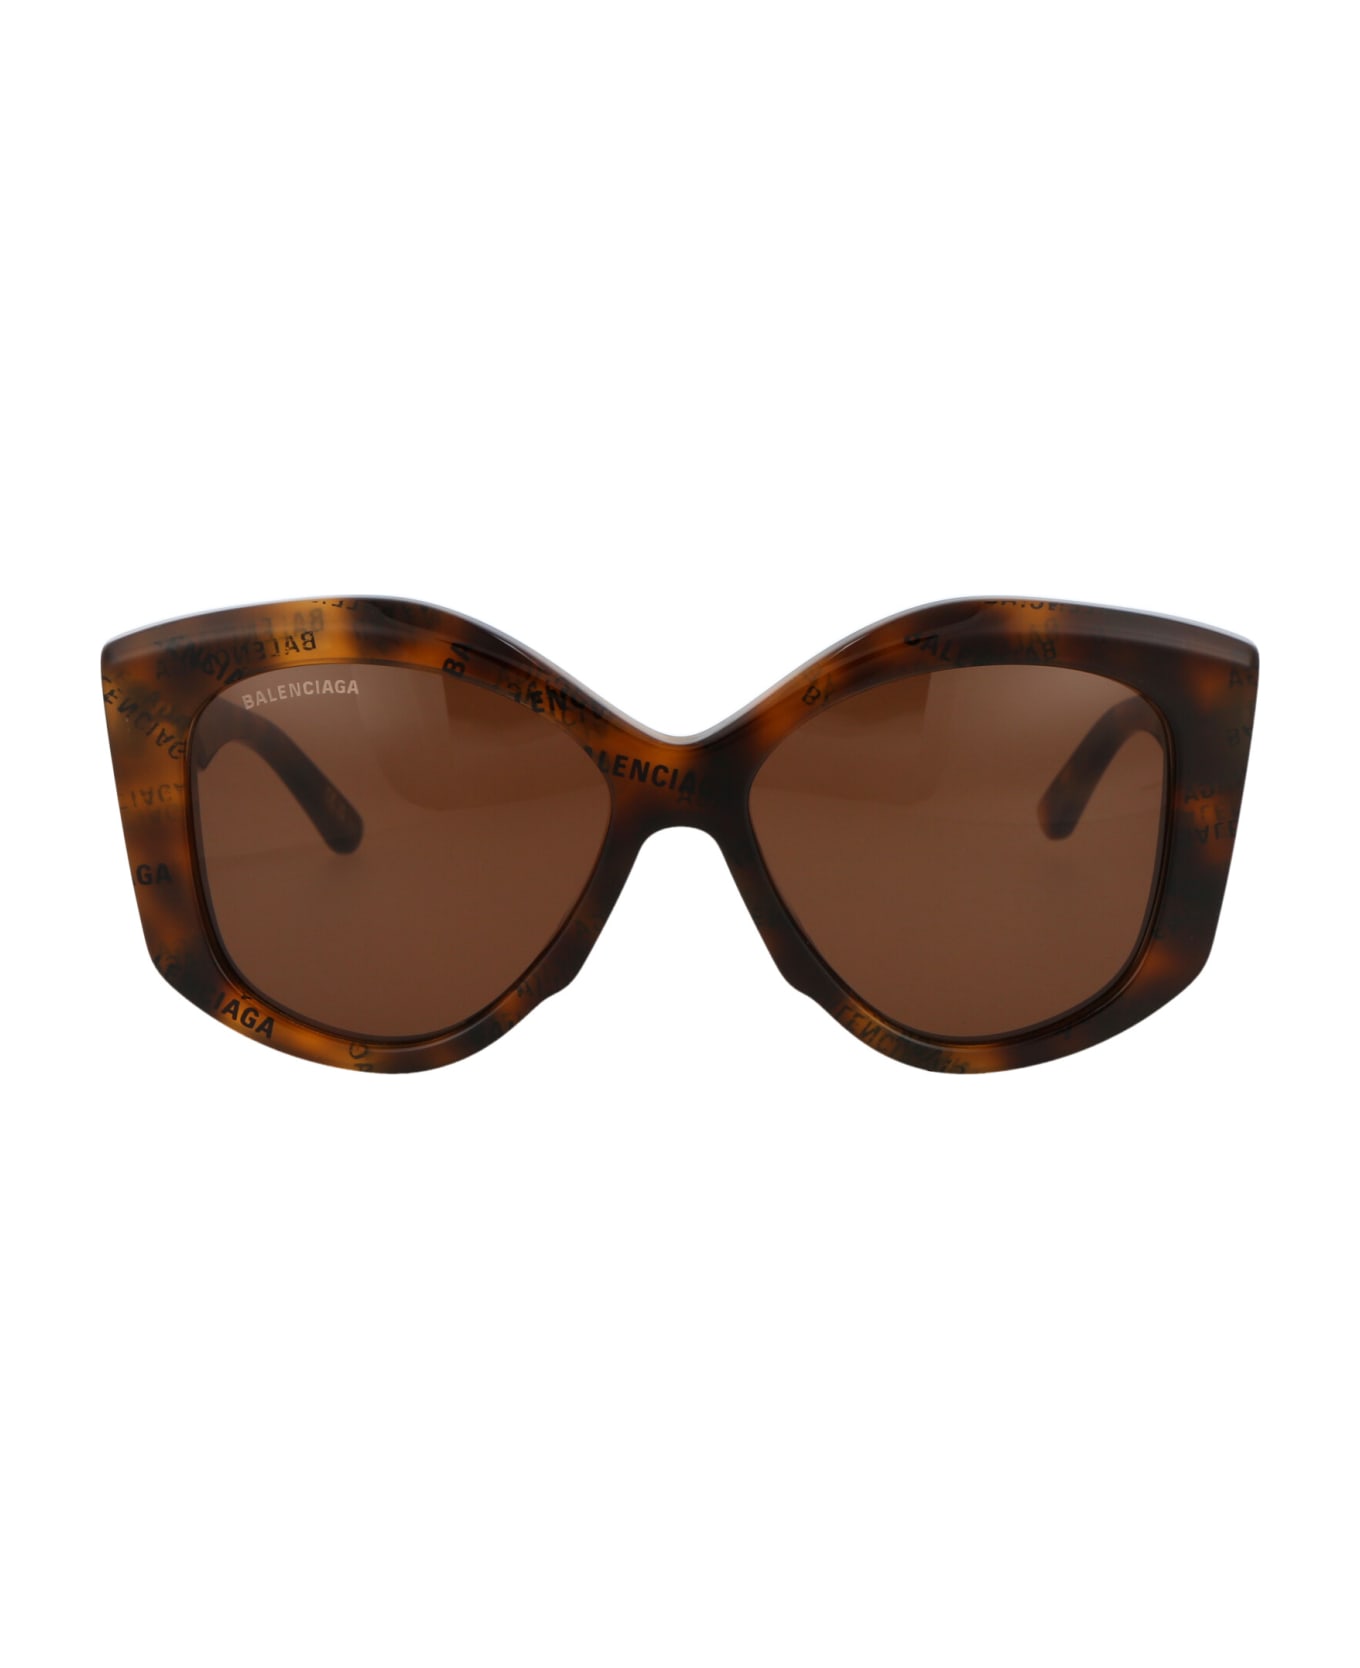 Balenciaga Eyewear Bb0126s Sunglasses - 005 Clyde Round Tortoiseshell-acetate Sunglasses Mens Beige